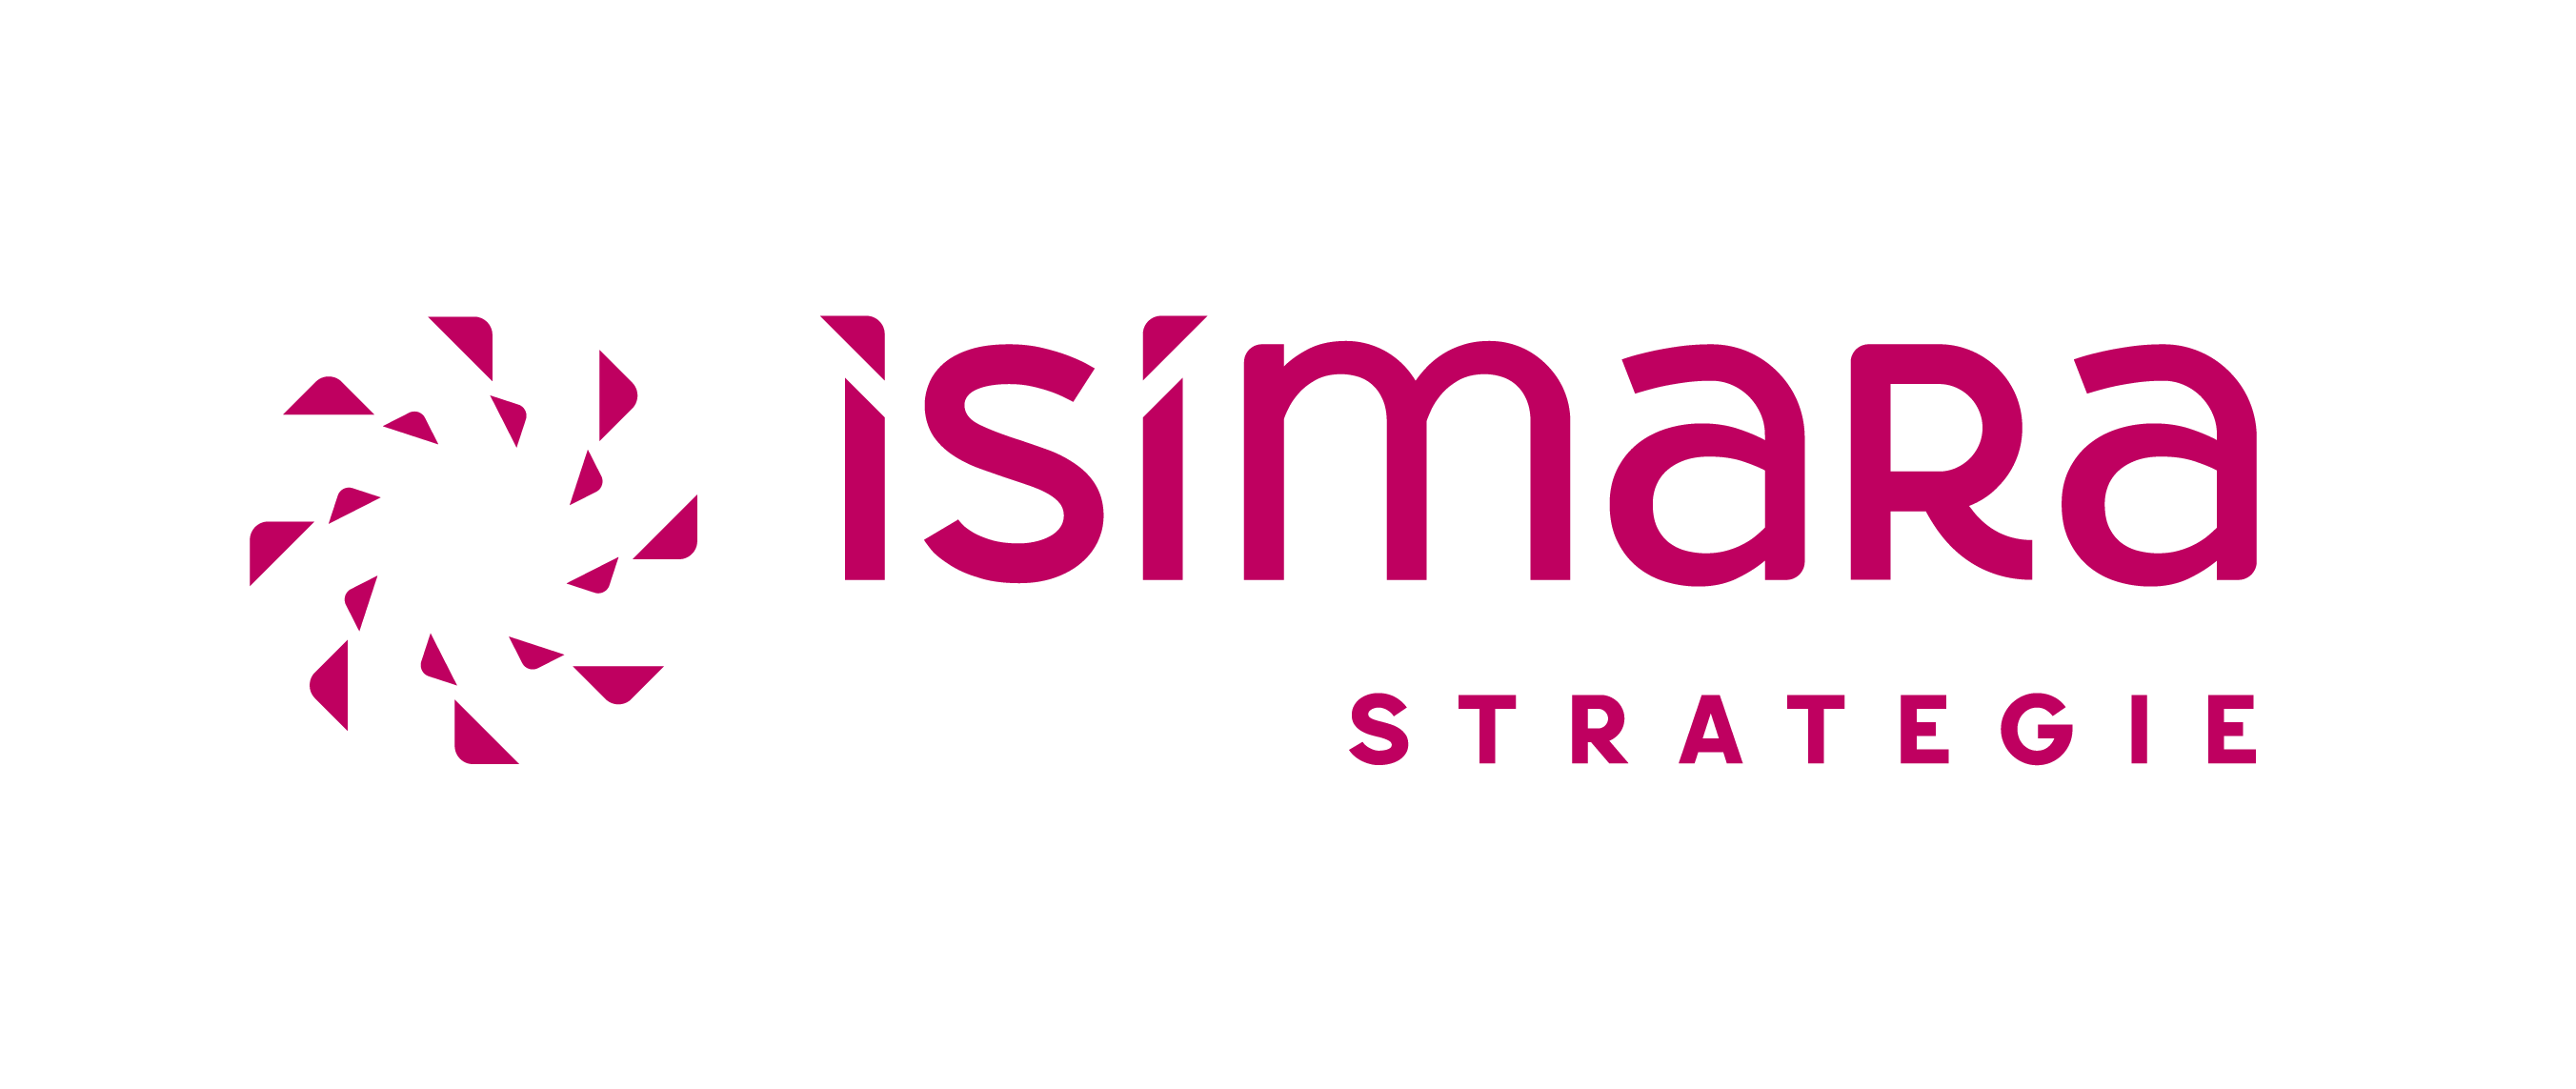 logo Strategie